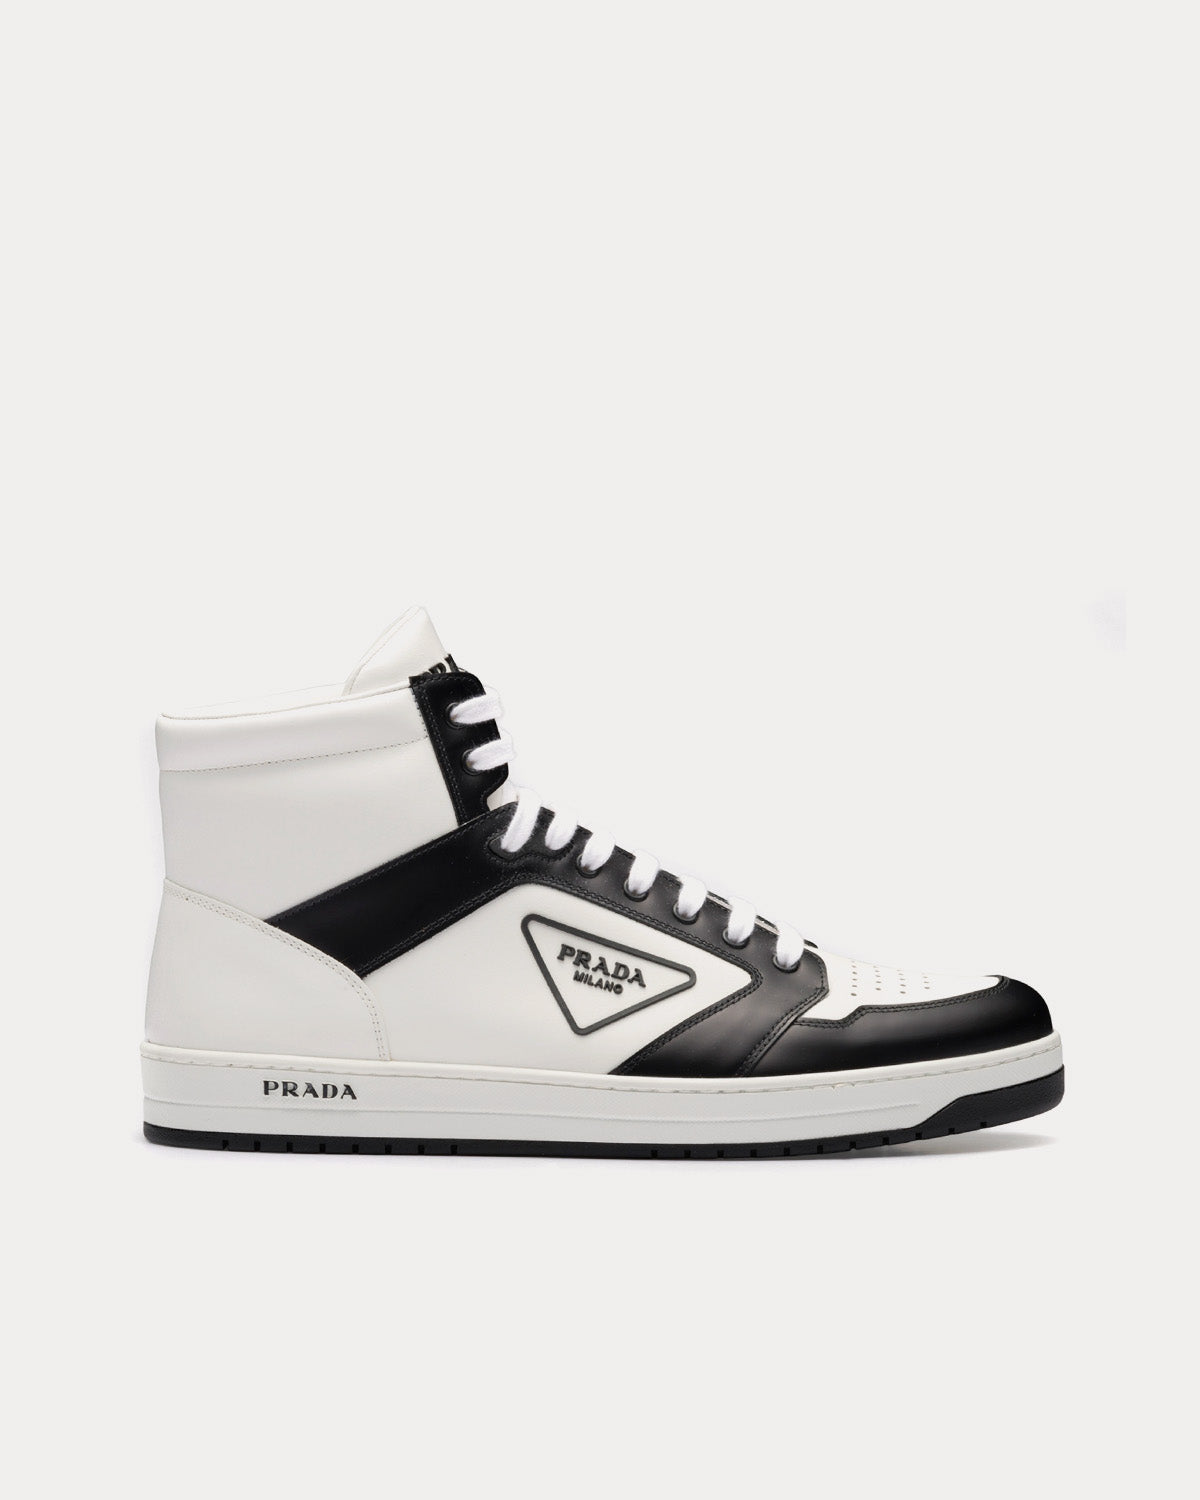 Prada District Leather White / Black High Top Sneakers - Sneak in Peace